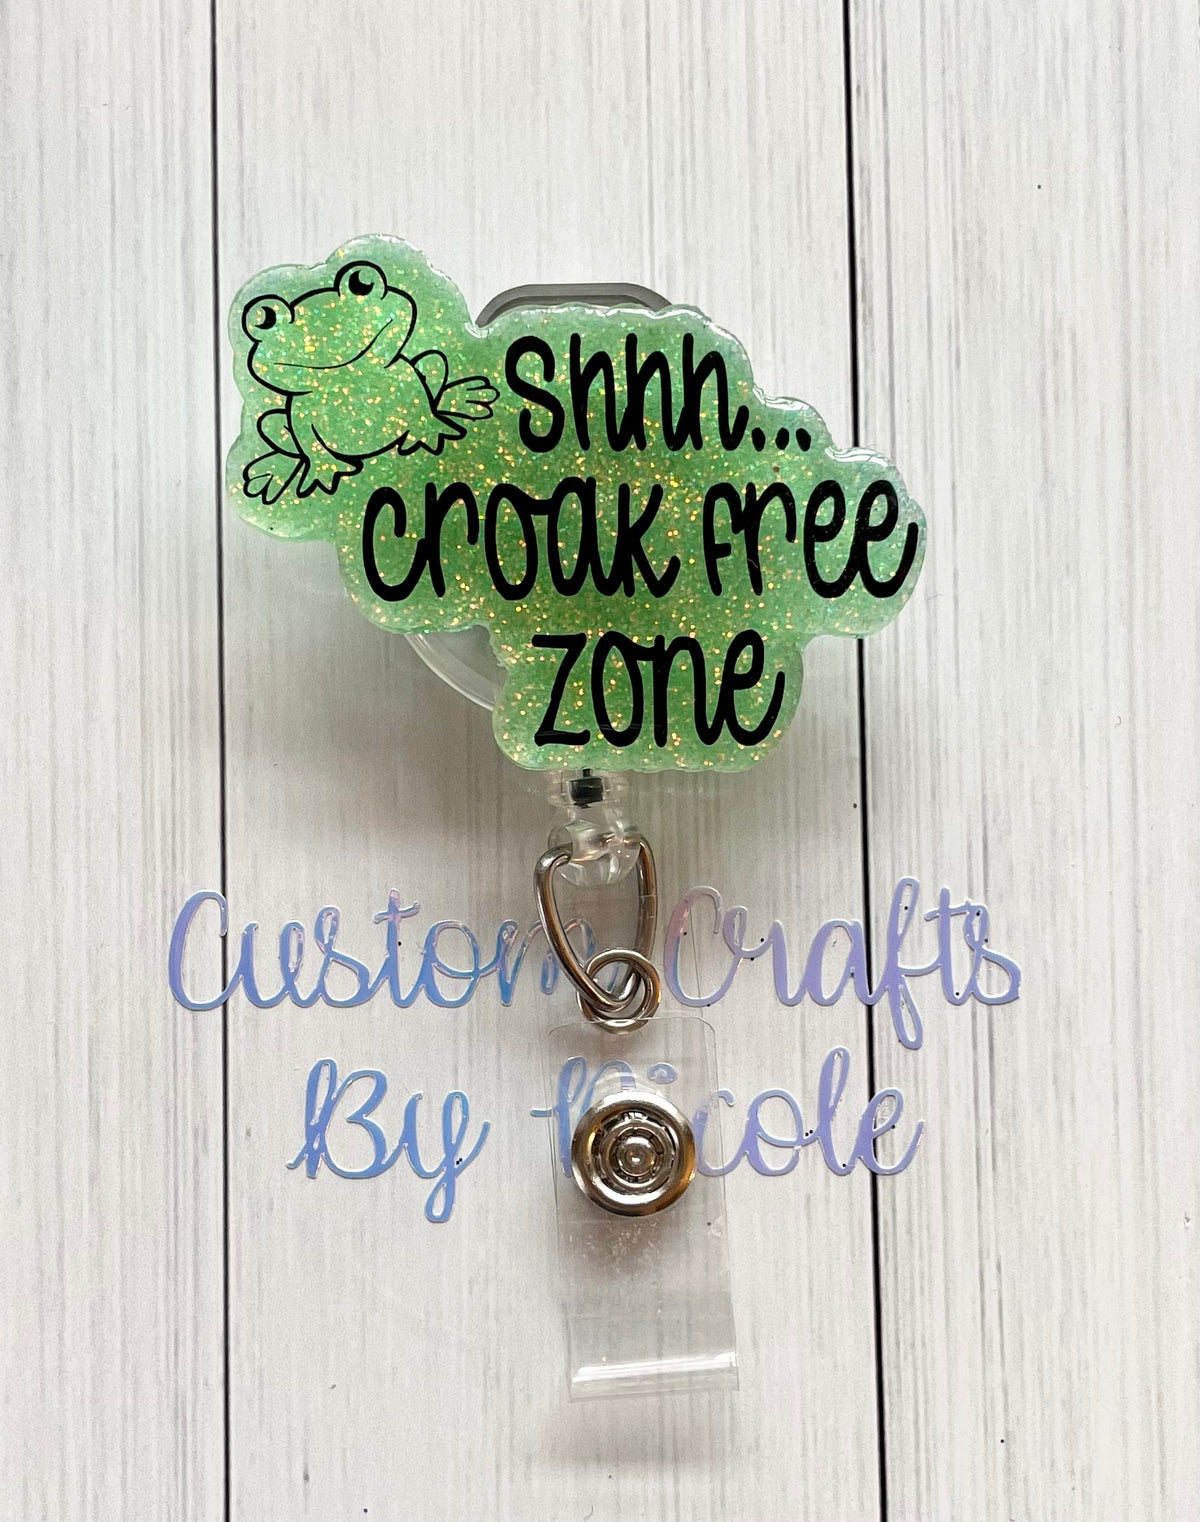 Croak free zone